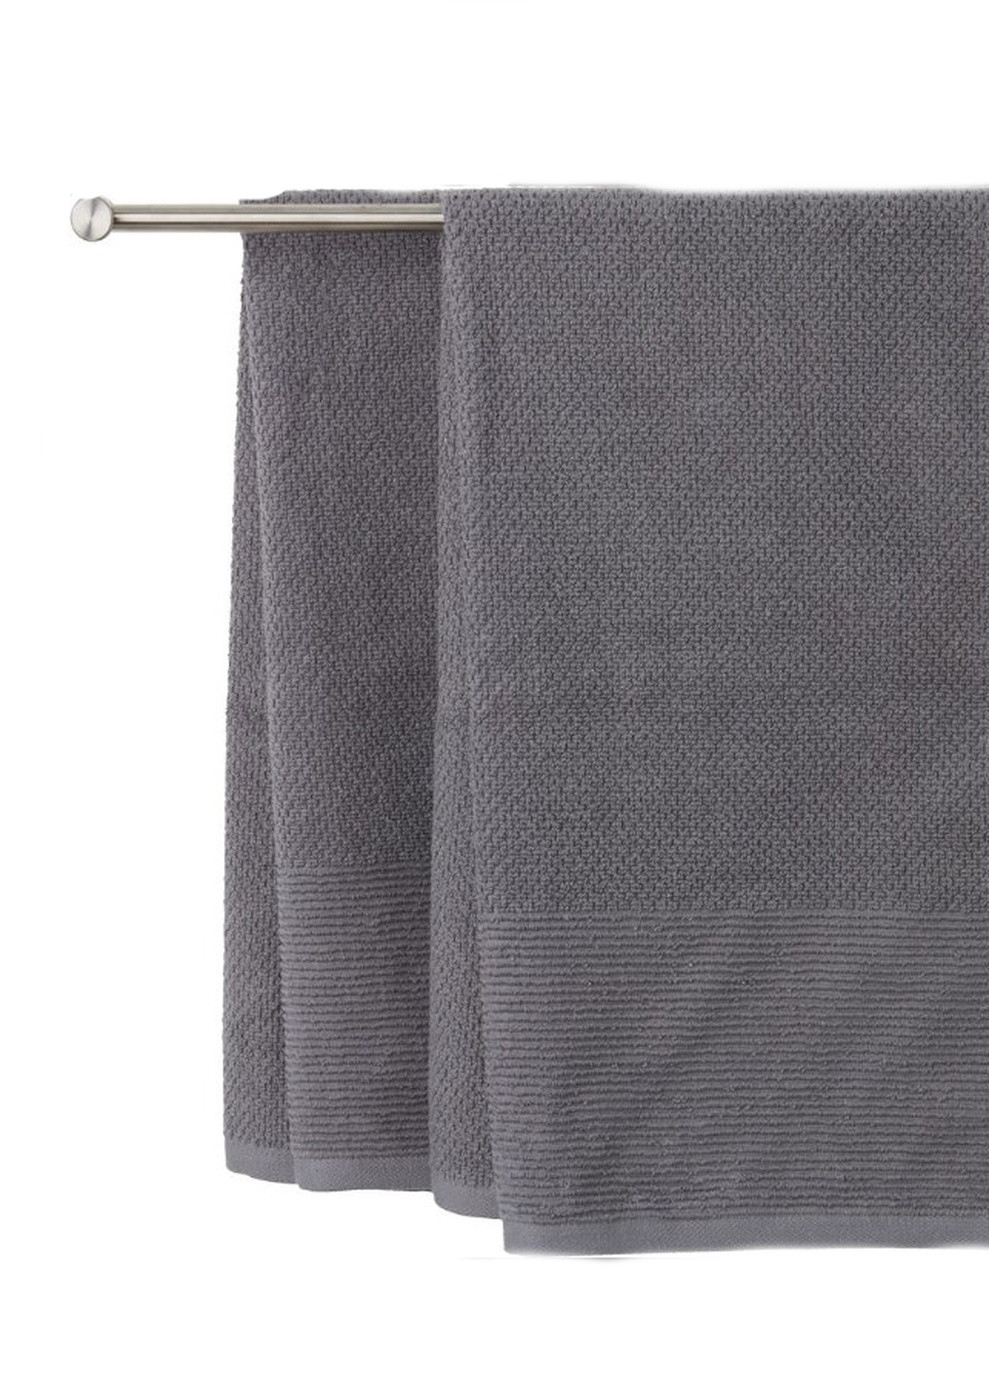 No Brand полотенце хлопок 65x130см серый серый производство - Китай